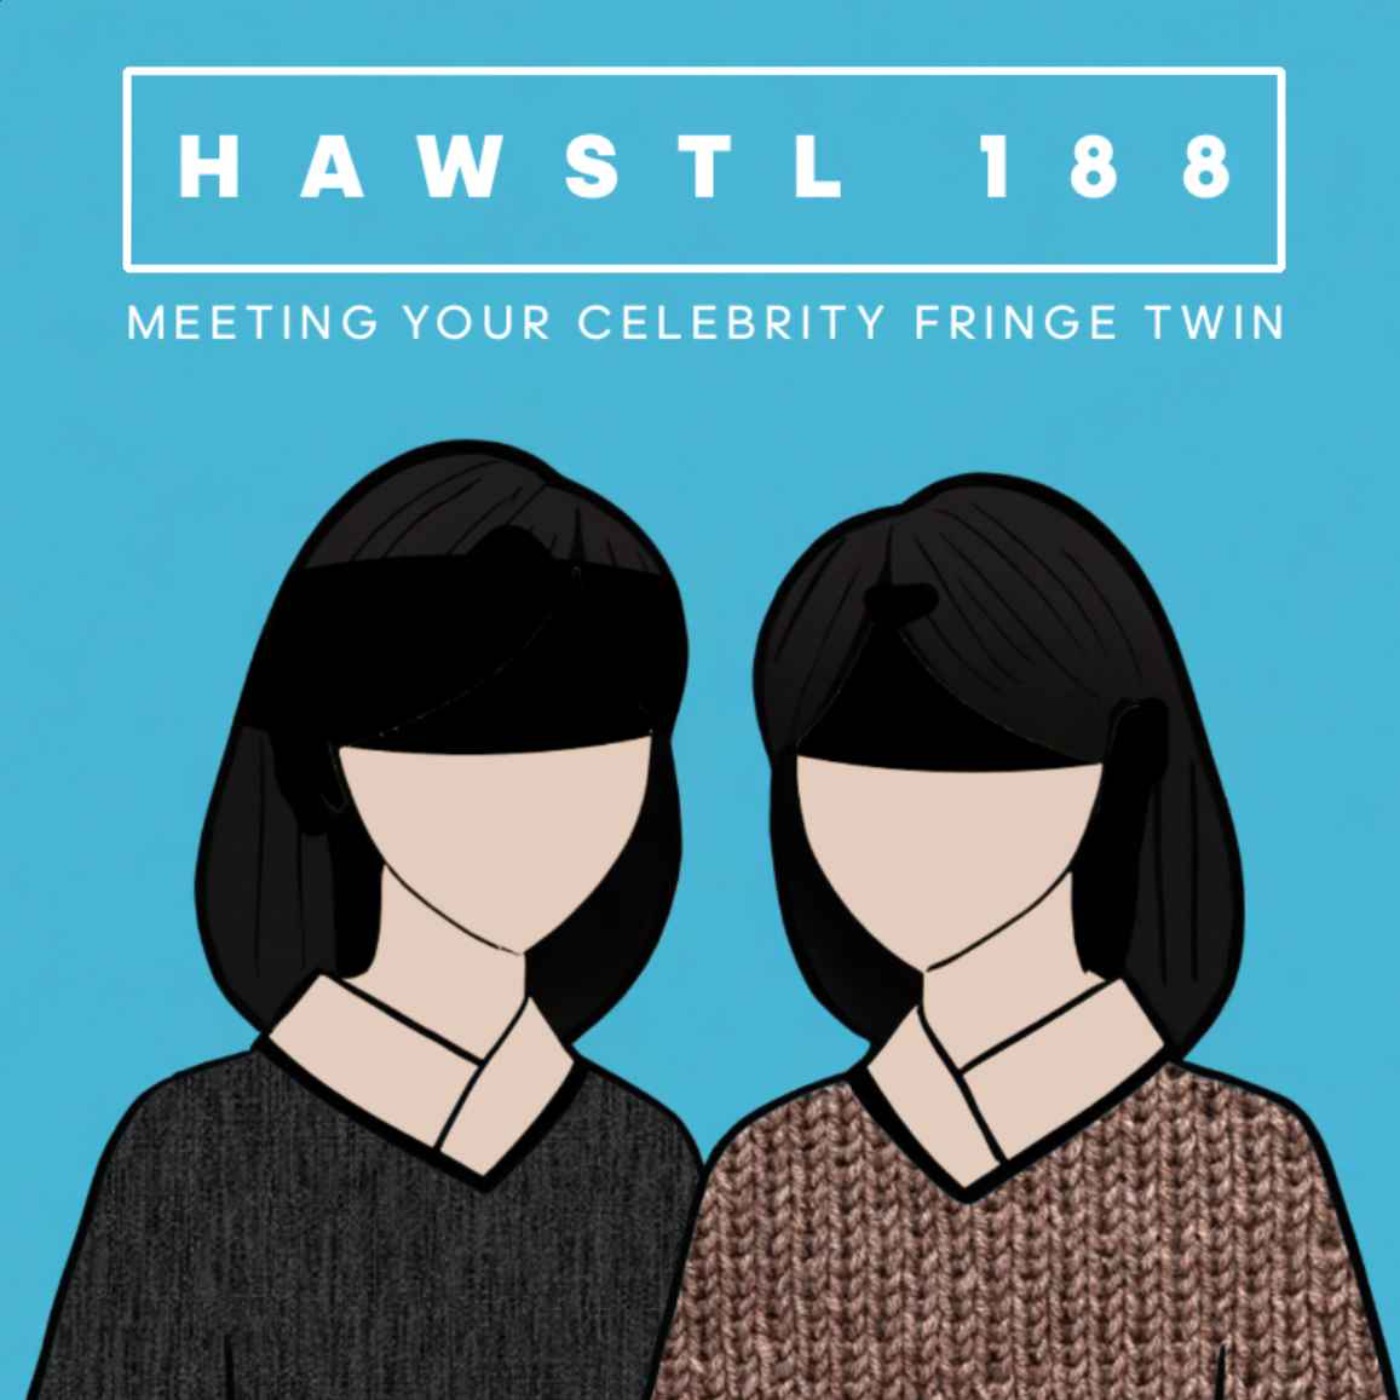 #HAWSTL 188 - Meeting Your Celebrity Fringe Twin